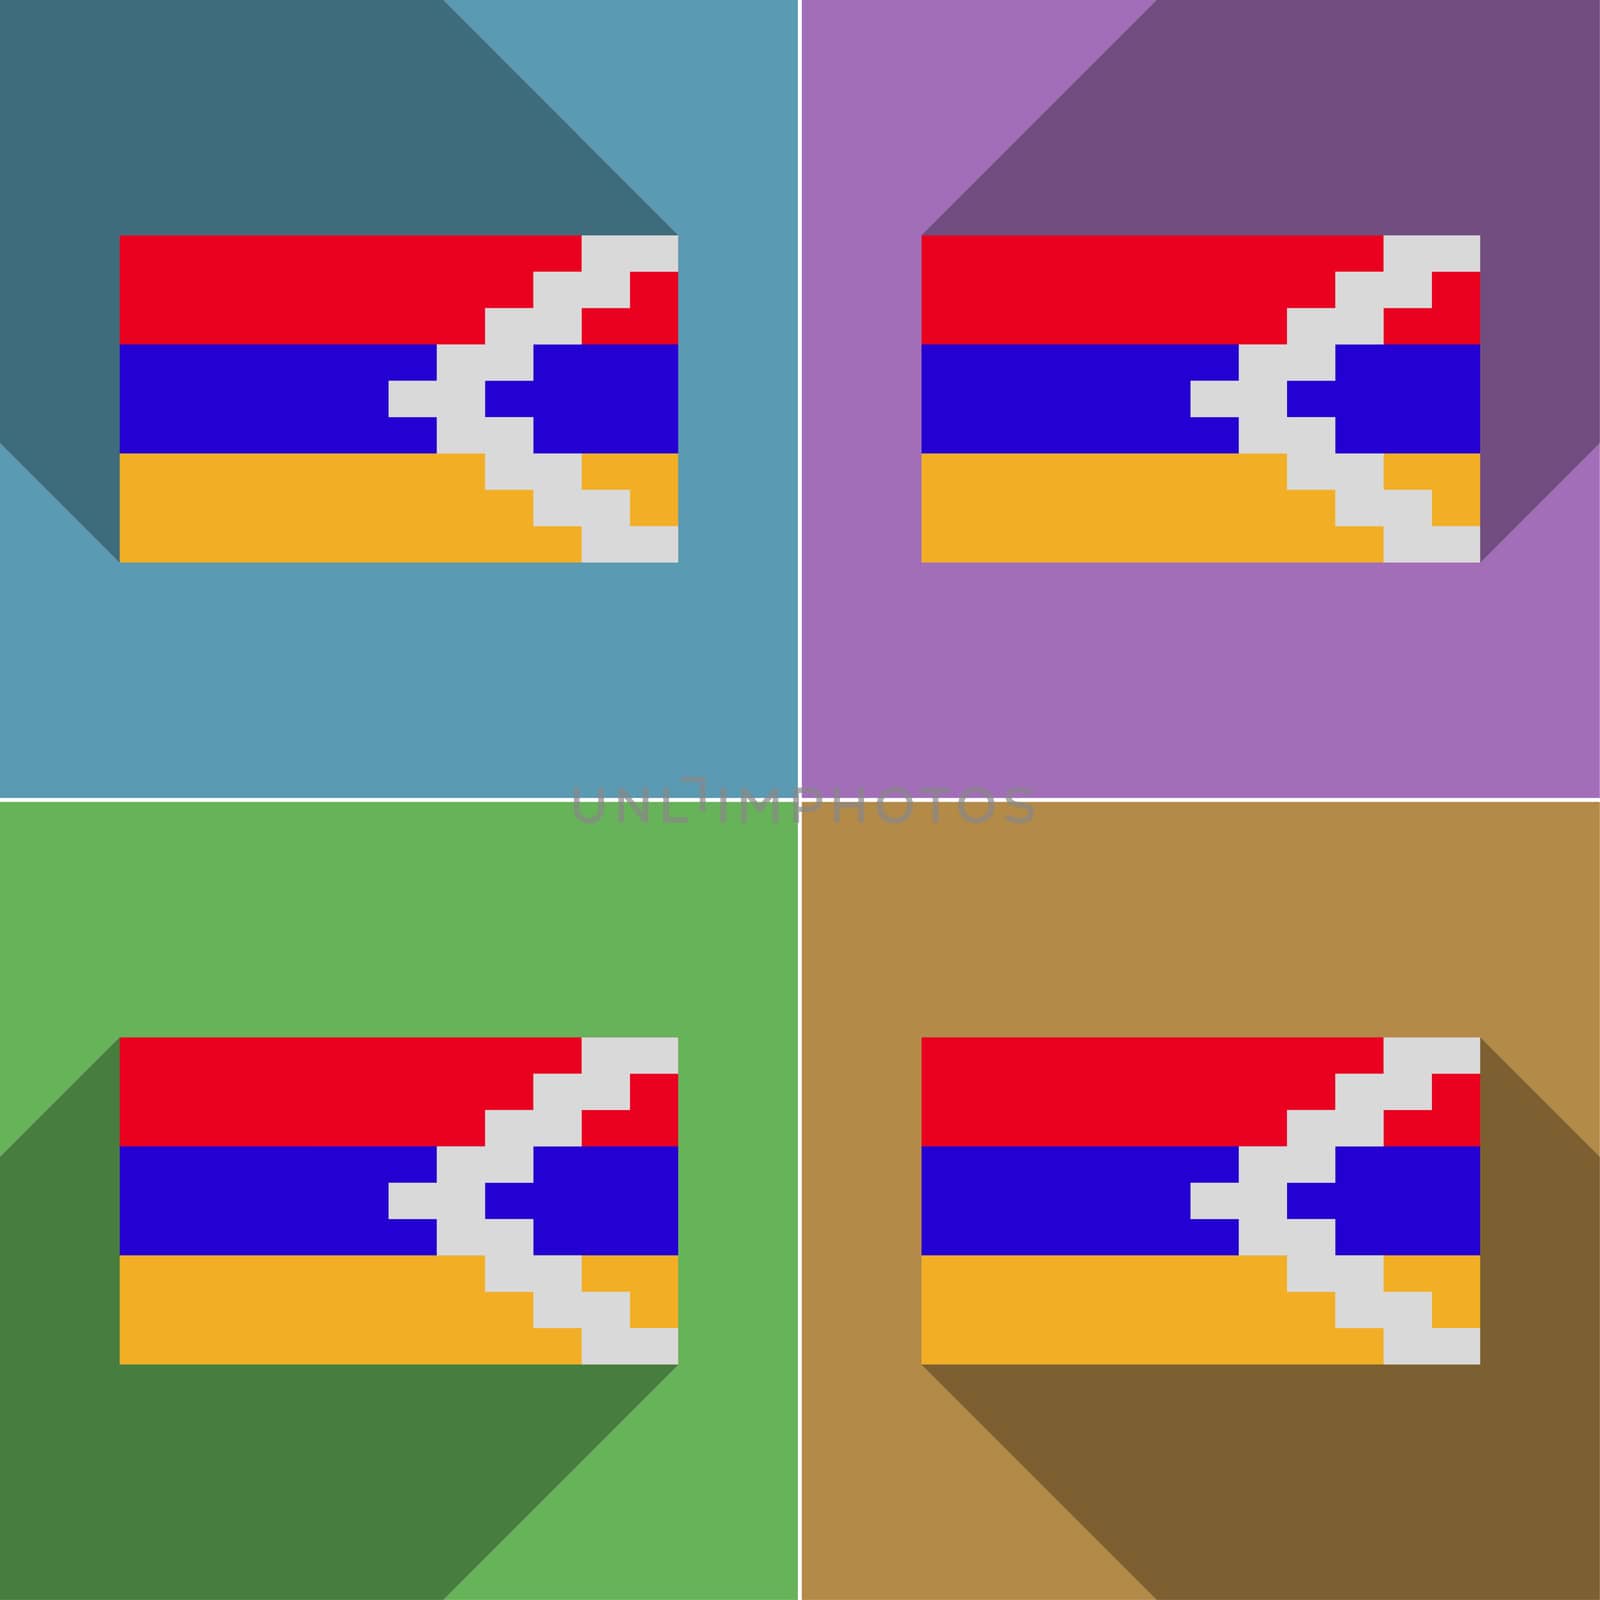 Flags of Karabakh Republic. Set of colors flat design and long shadows.  illustration